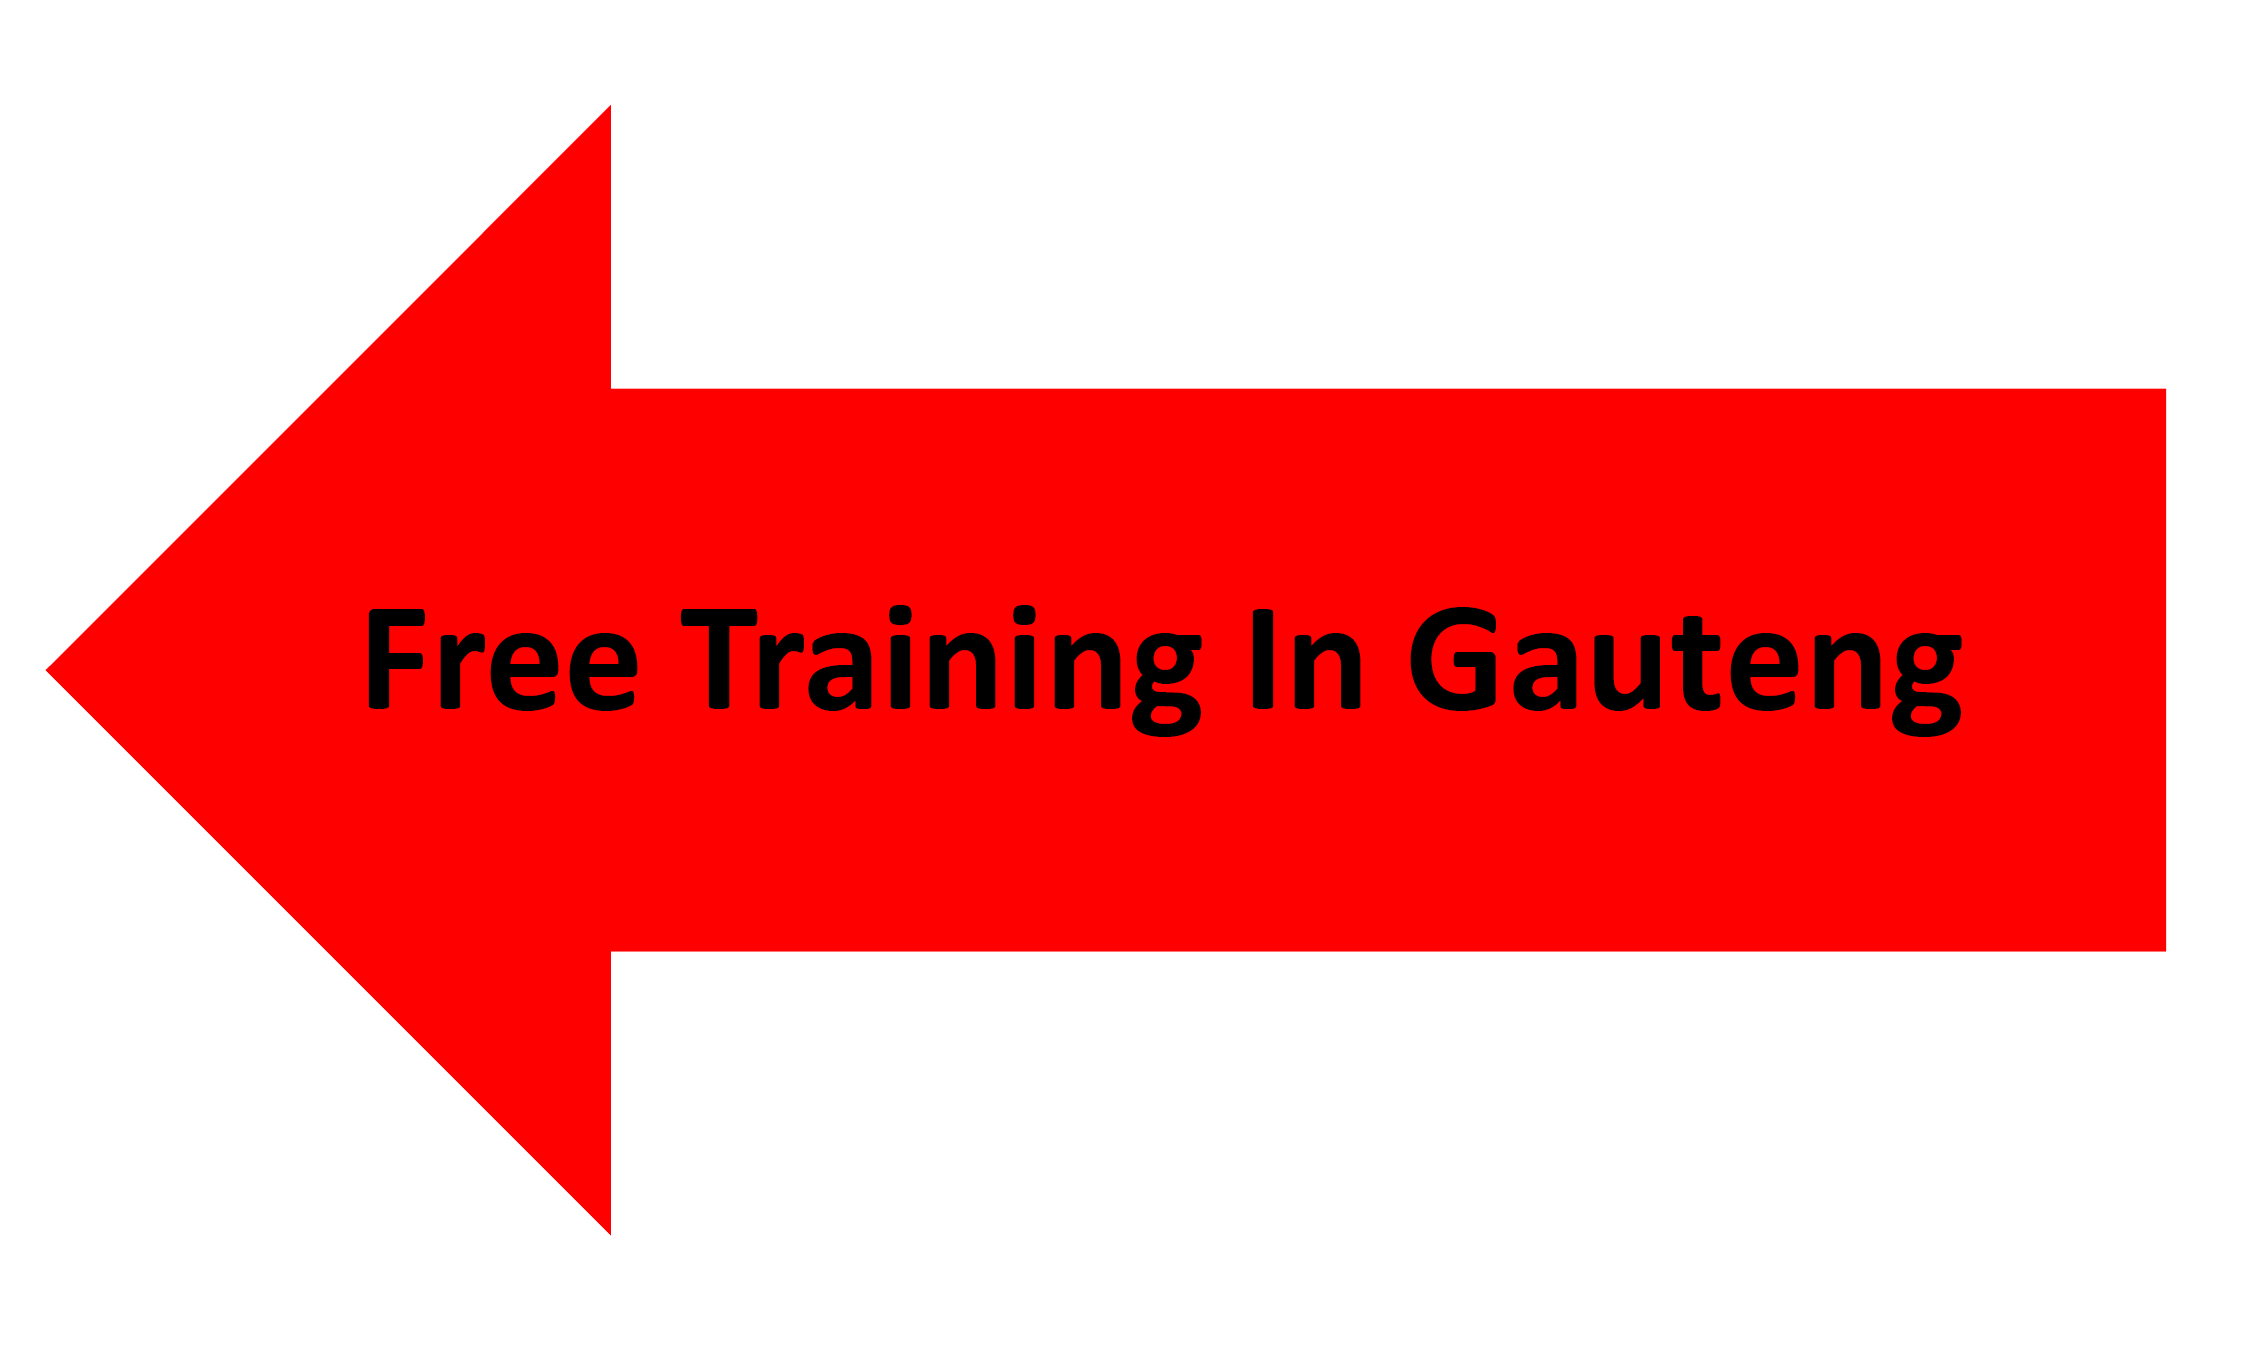 Free training in Gauteng